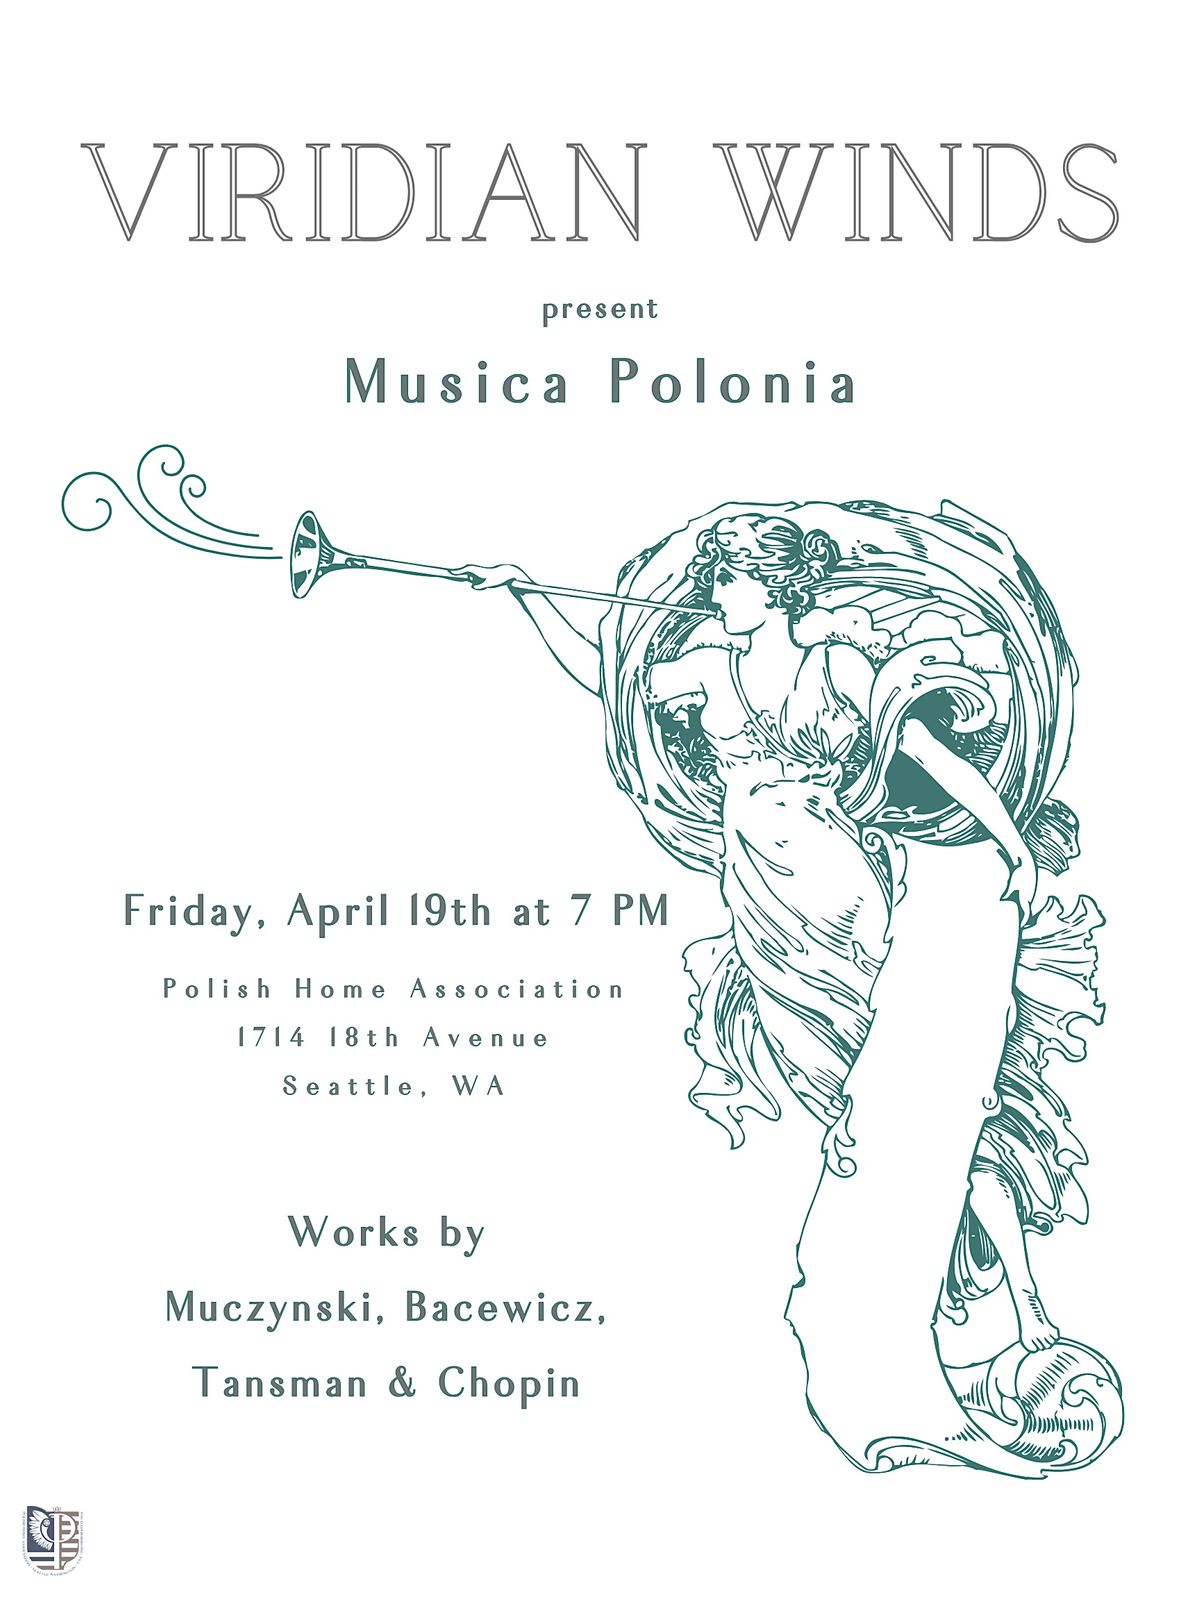 Viridian Winds present Musica Polonia